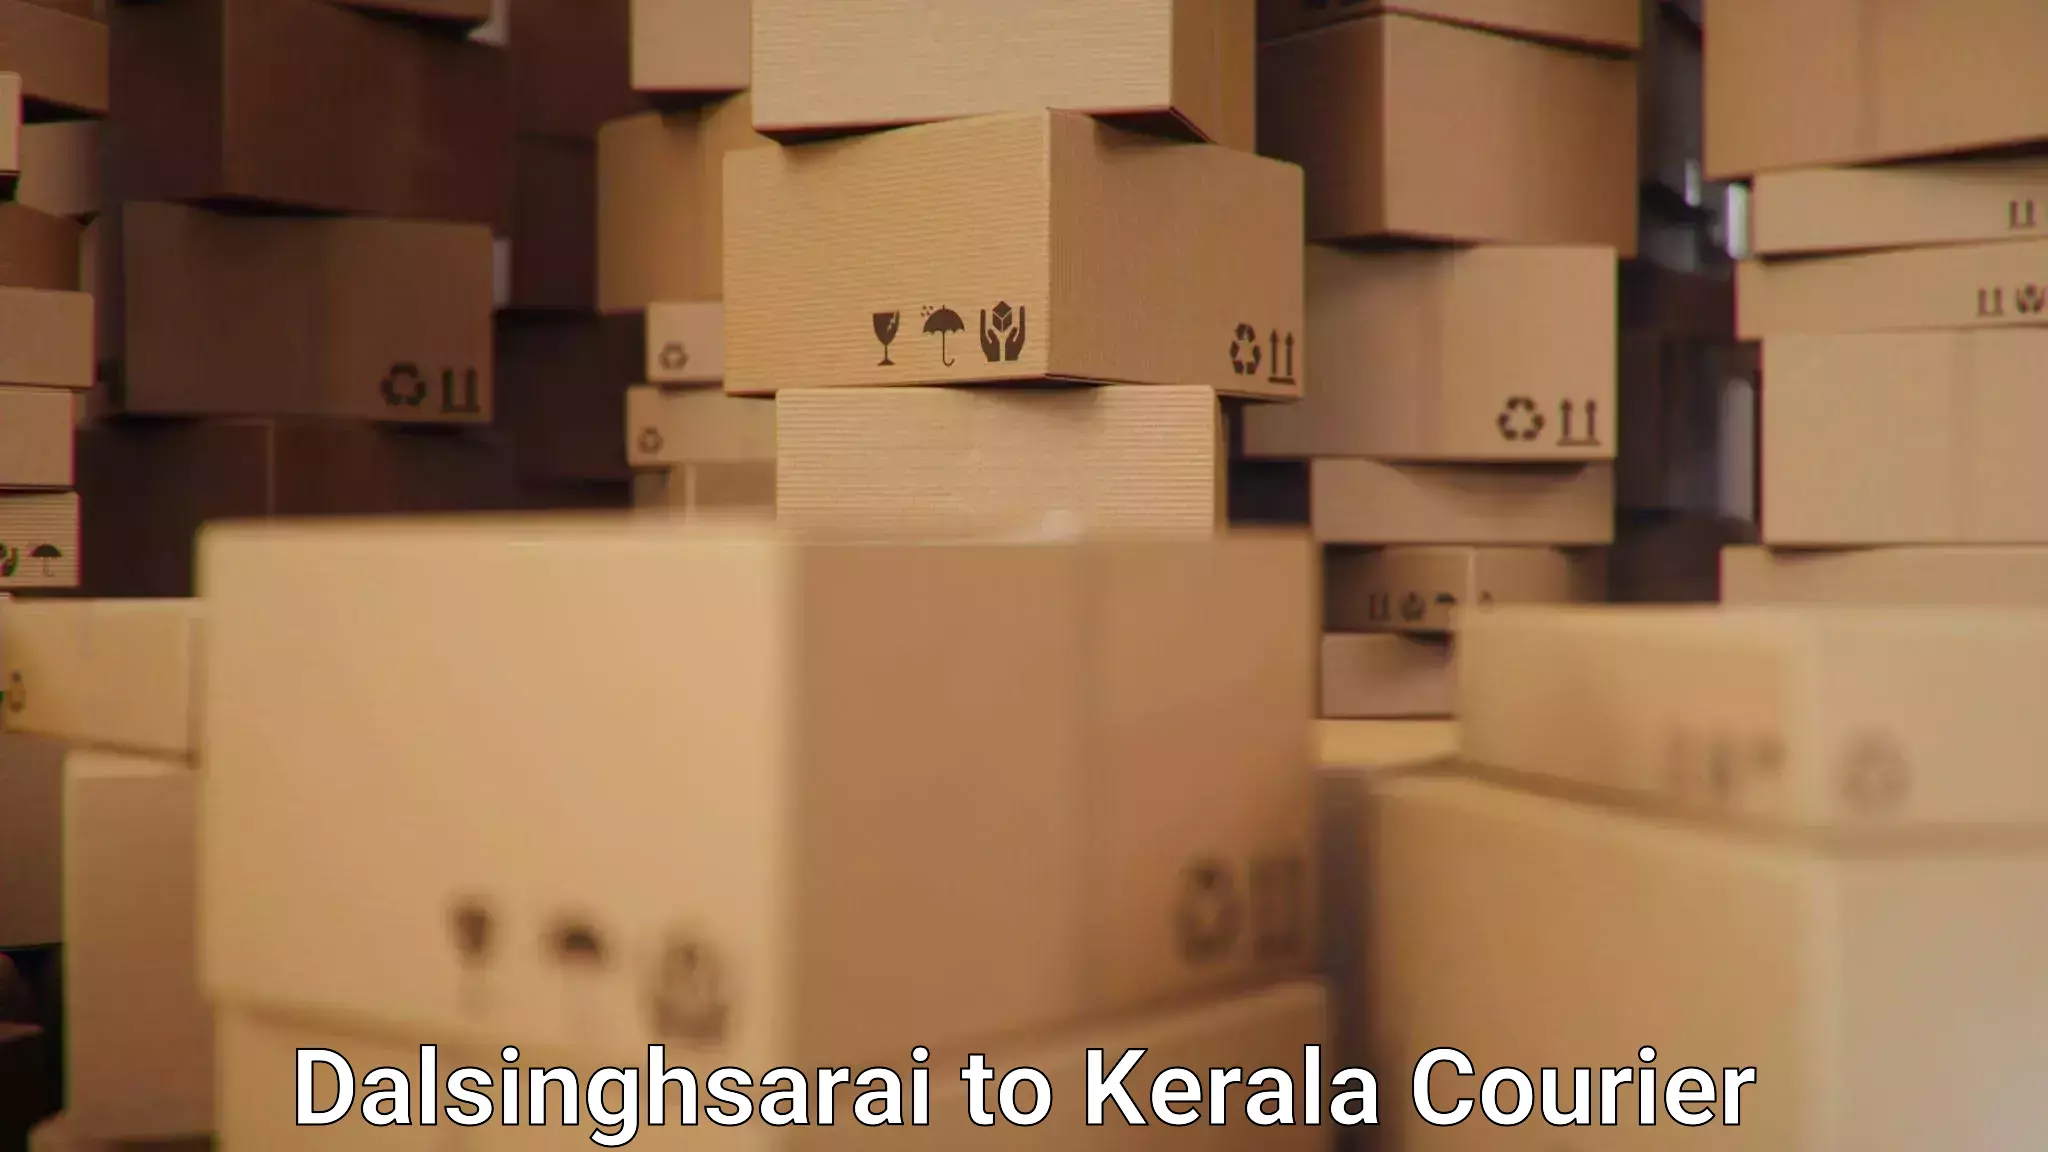 Courier service innovation Dalsinghsarai to Kuthiathode